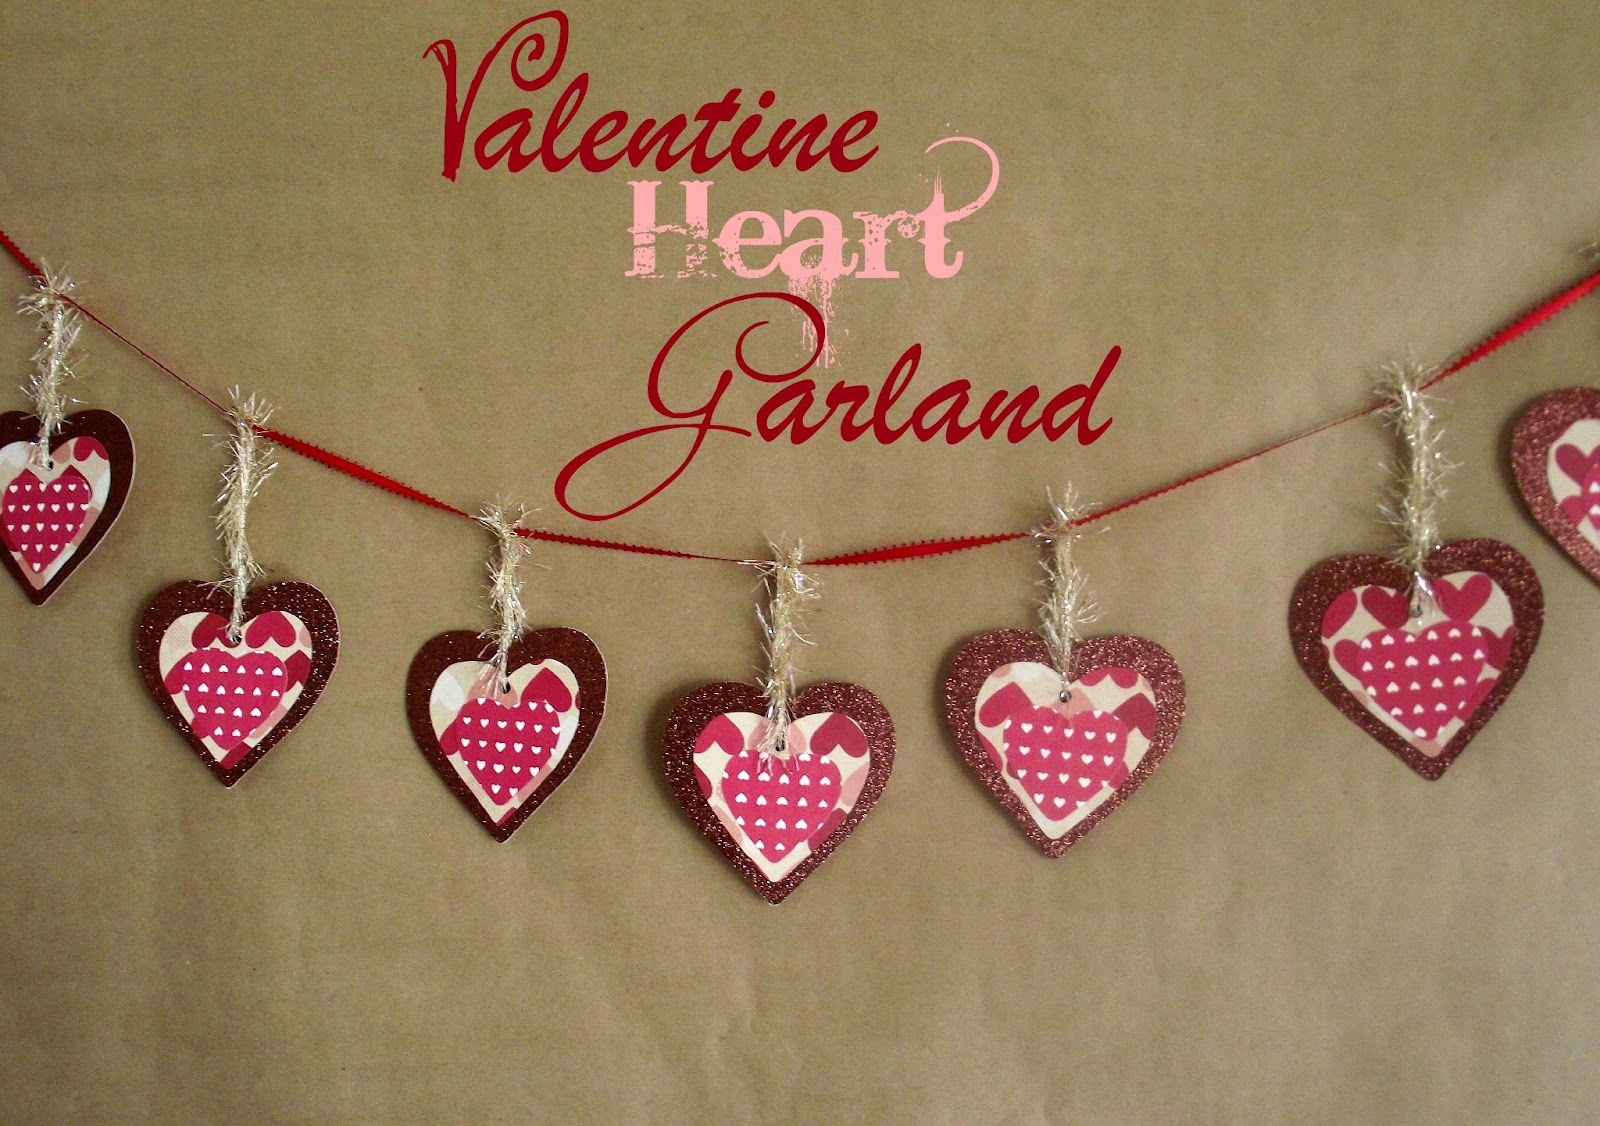 So Domesticated Valentine Heart Garland...